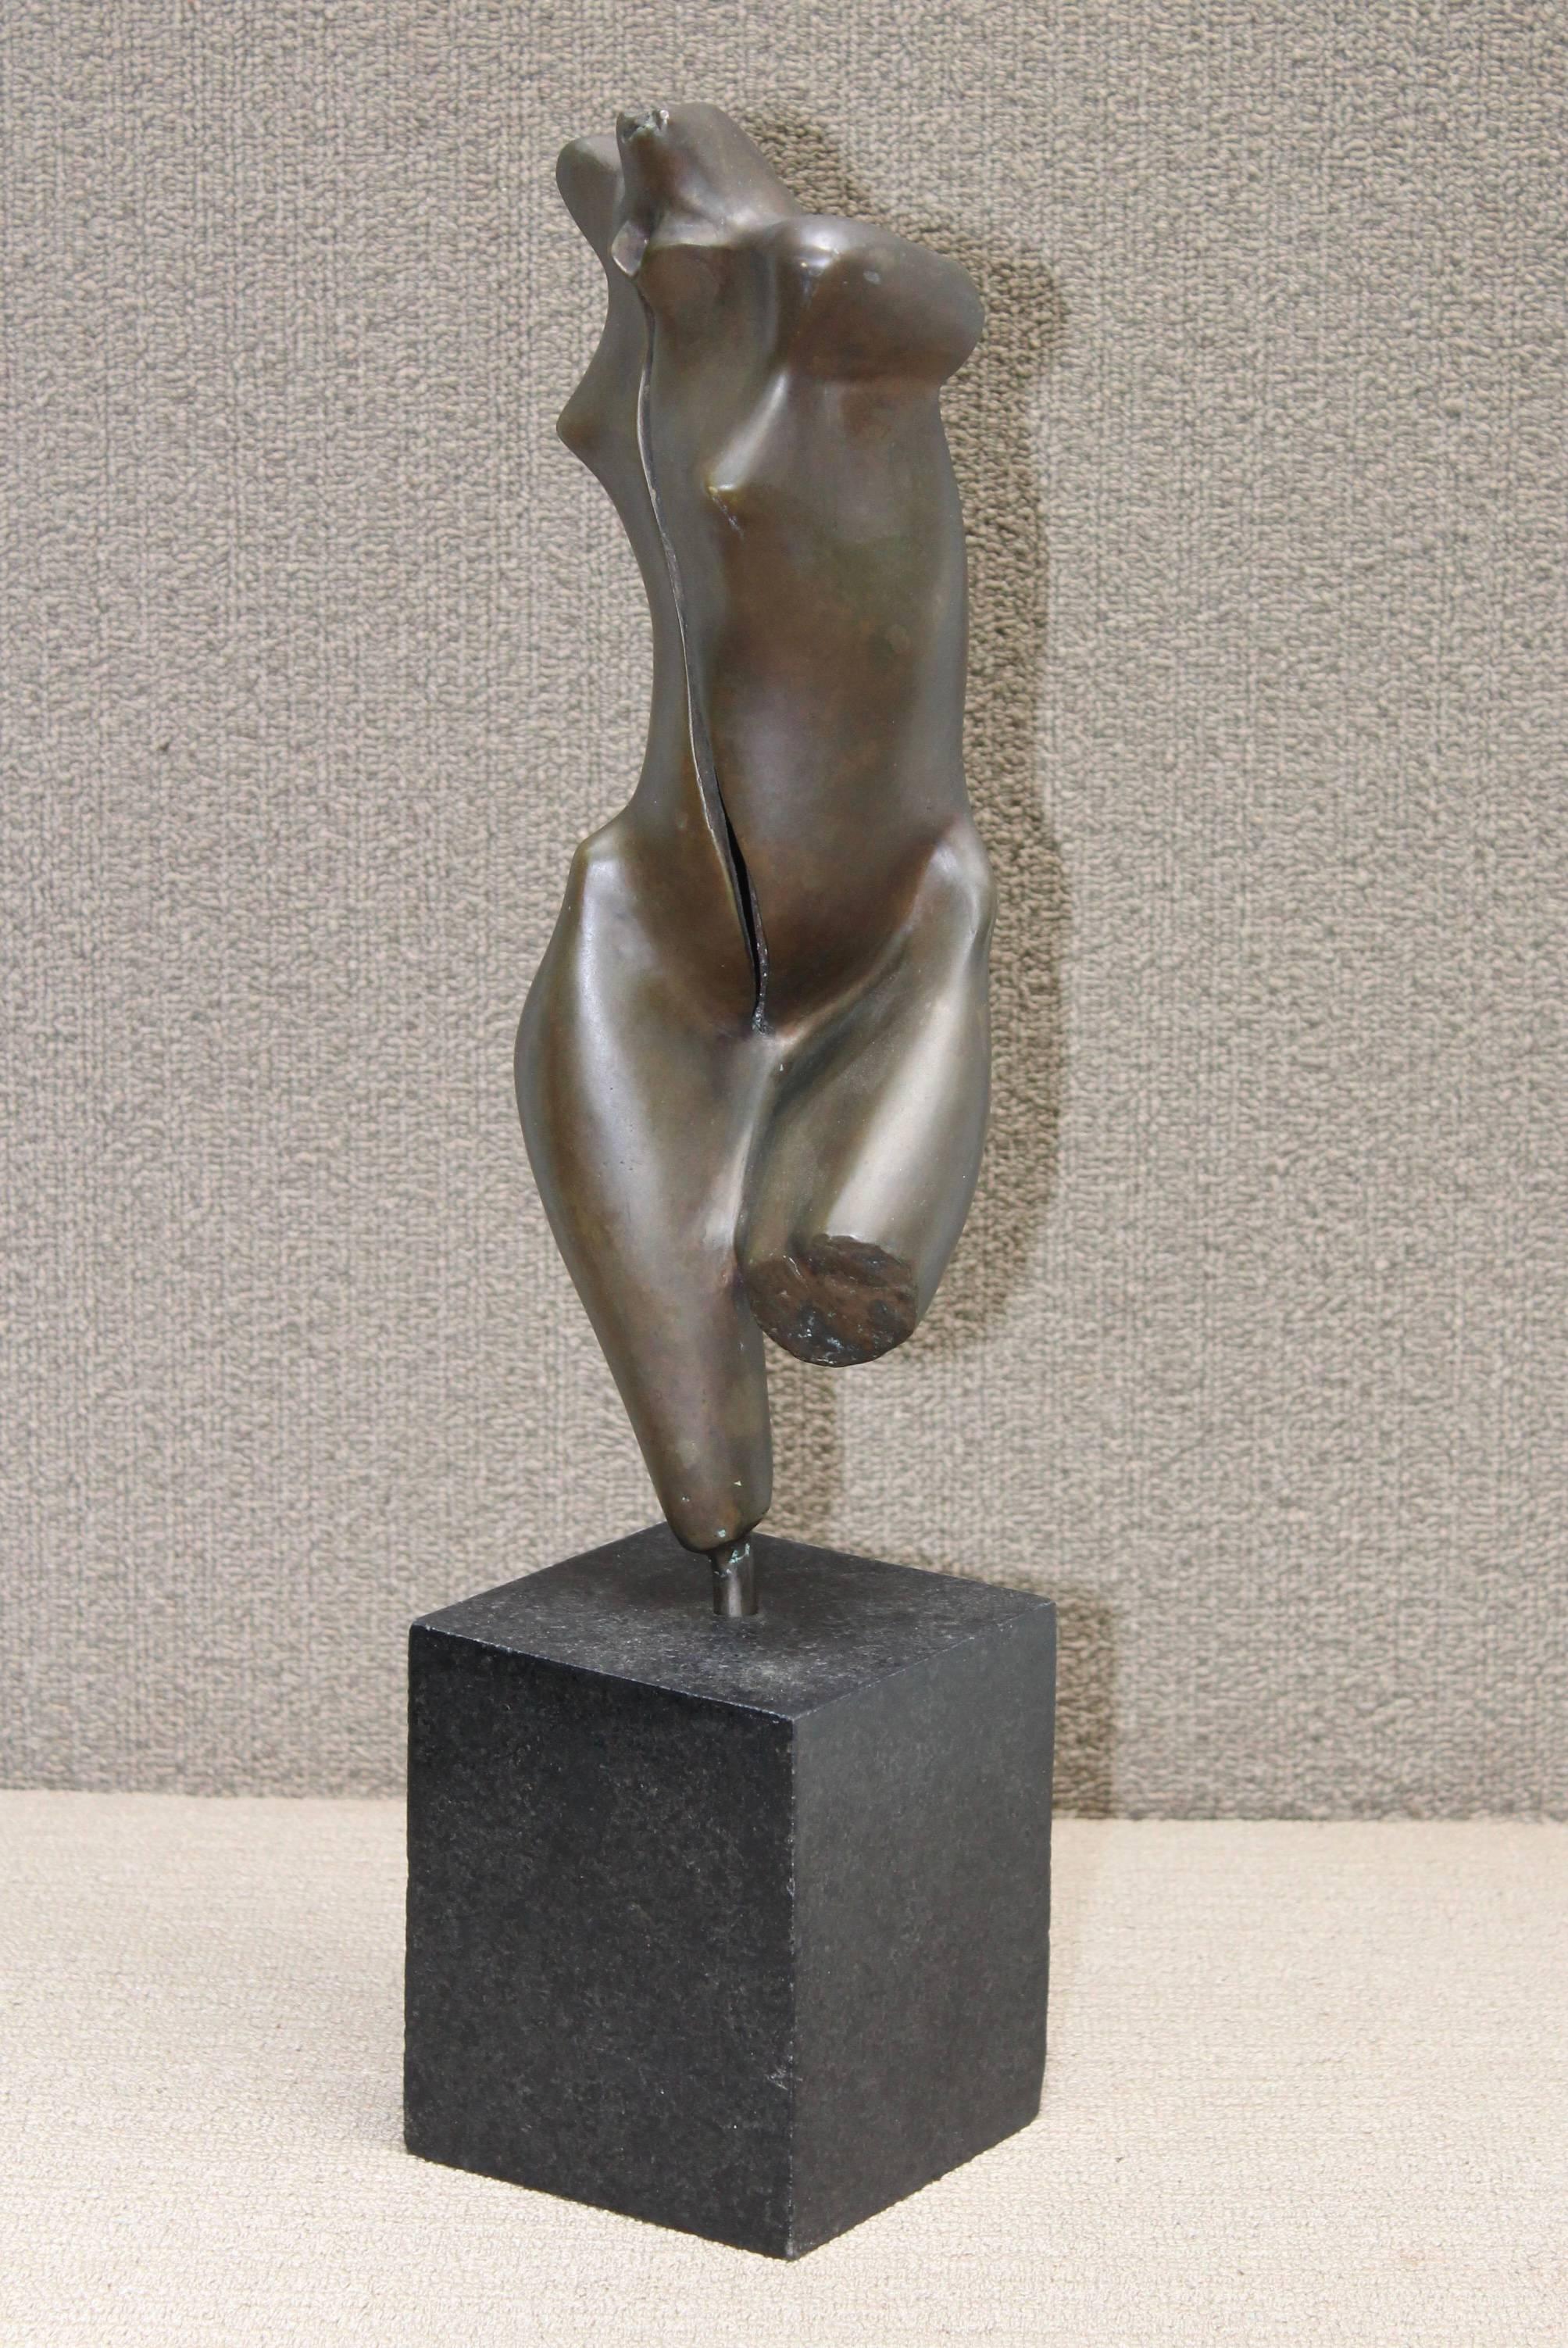 1970s Mid-Century Modern bronze nude women torso sculpture by Oxana Narozniak. Oxana Narozniak is a Ukrainian artist born in Germany then move to Brazil currently she lives in Miami.